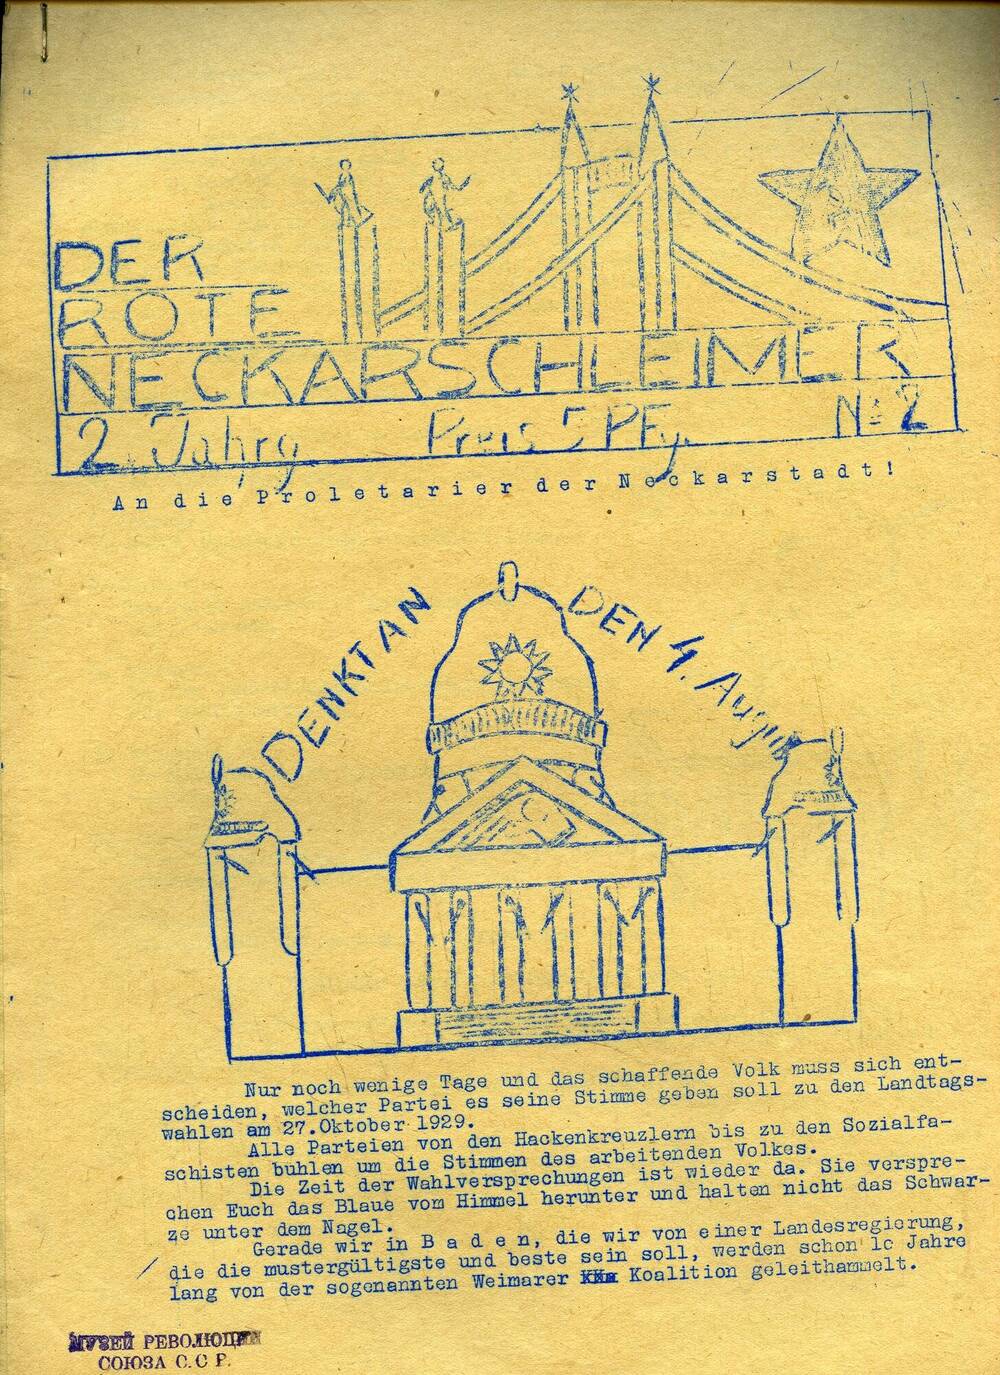 КПГ, местная организация. Газета Der Rote Neckarschleimer. N 2.